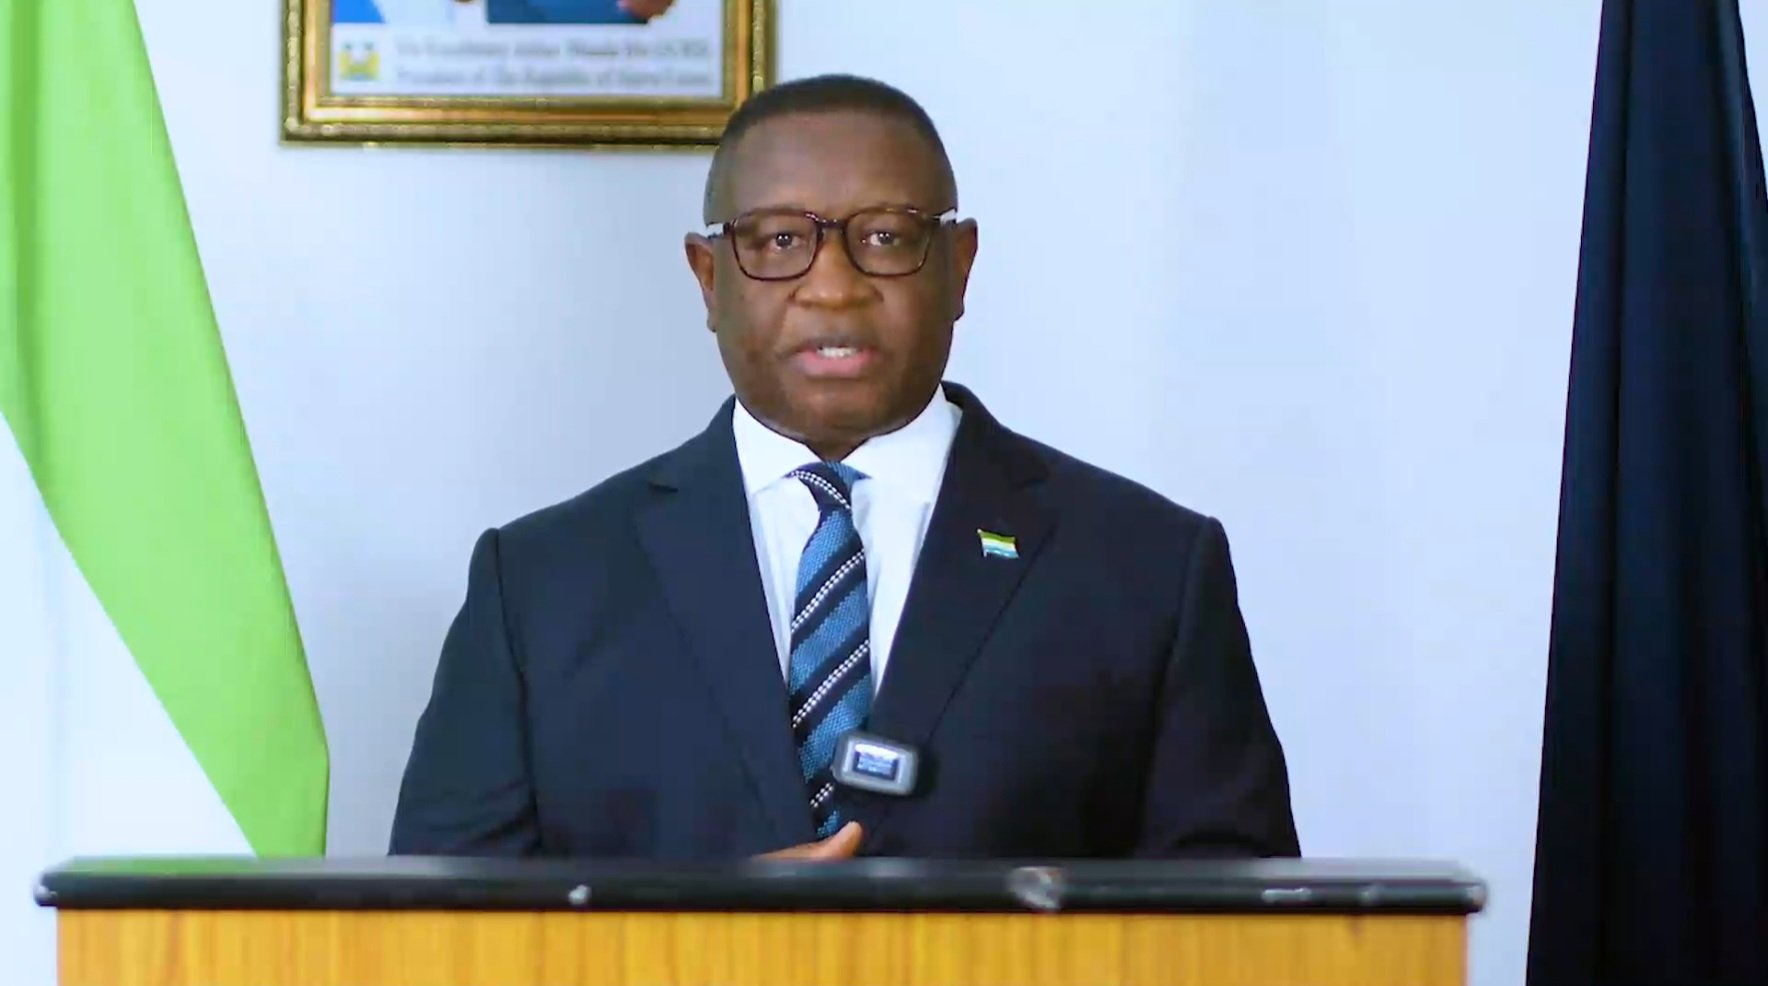 President Bio Addresses Sierra Leoneans After Heavy Gunfire in Freetown